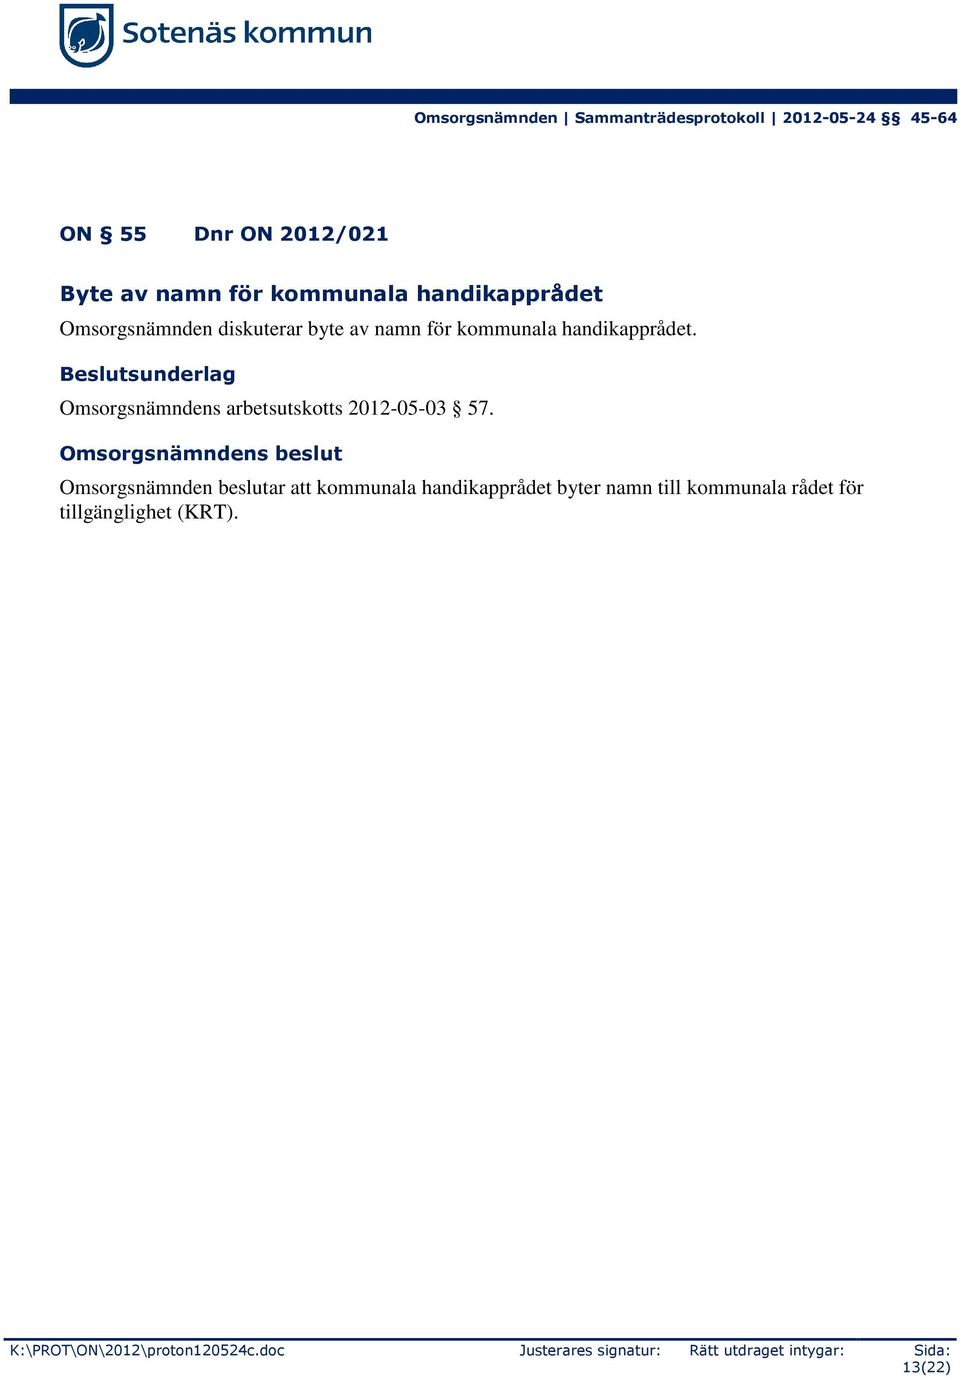 Beslutsunderlag Omsorgsnämndens arbetsutskotts 2012-05-03 57.